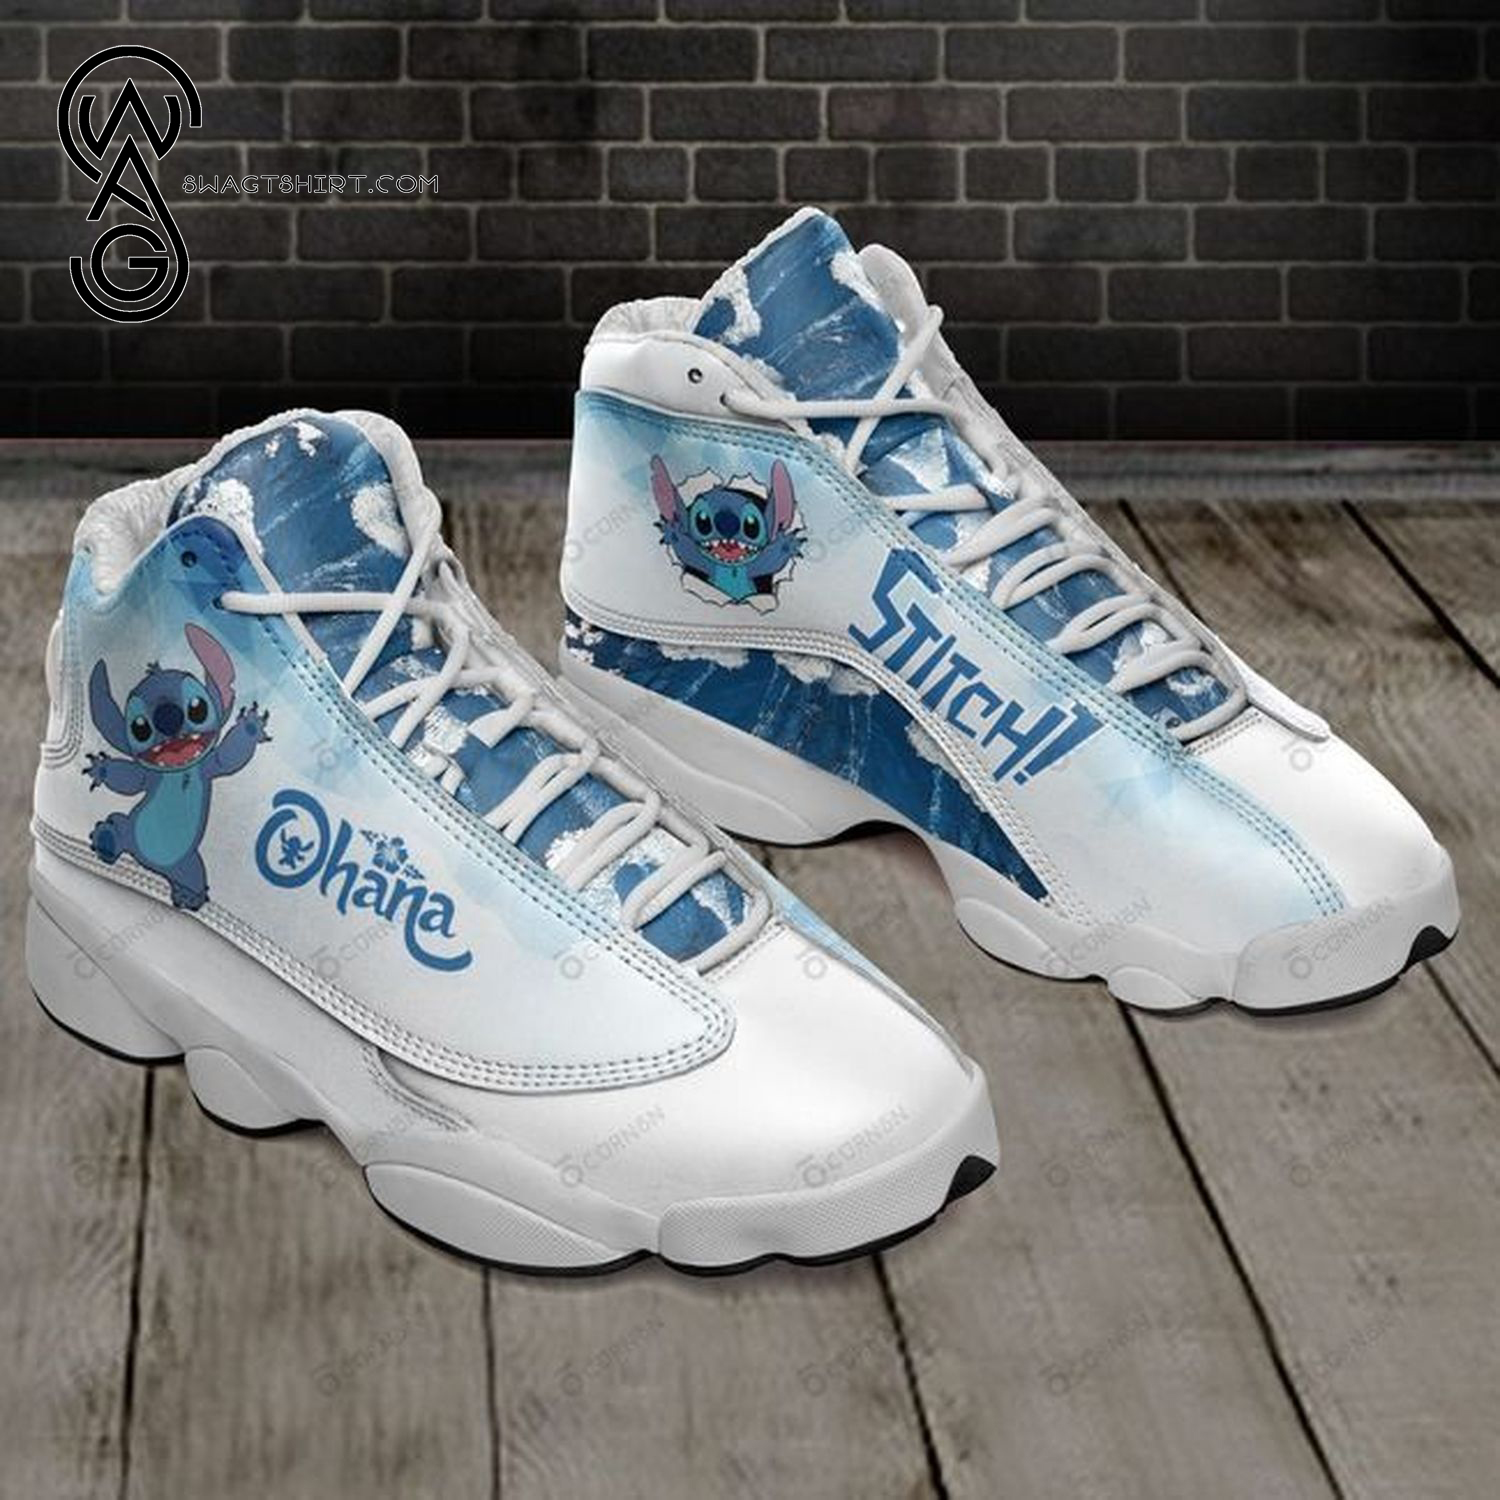 Stitch Ohana Sport Air Jordan 13 Shoes